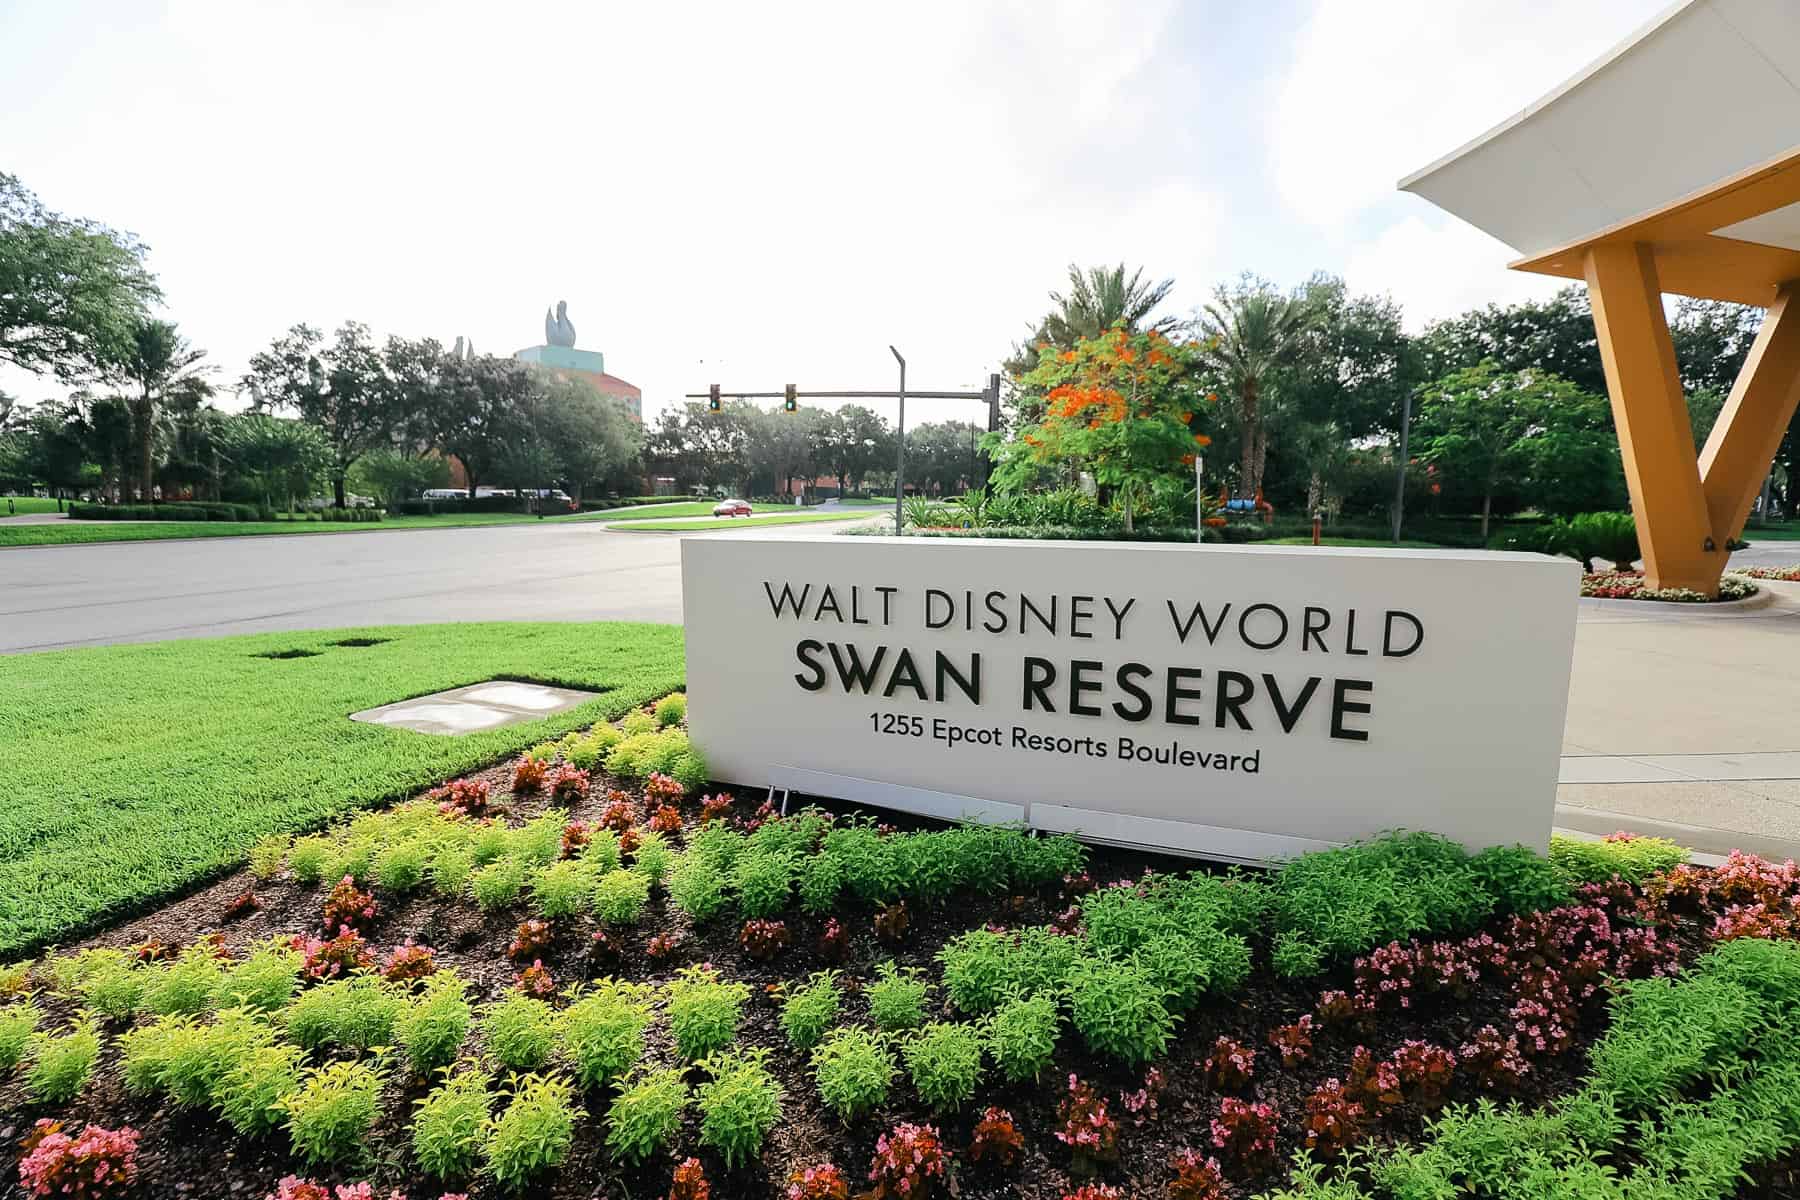 Entrance to the Walt Disney World Swan Reserve